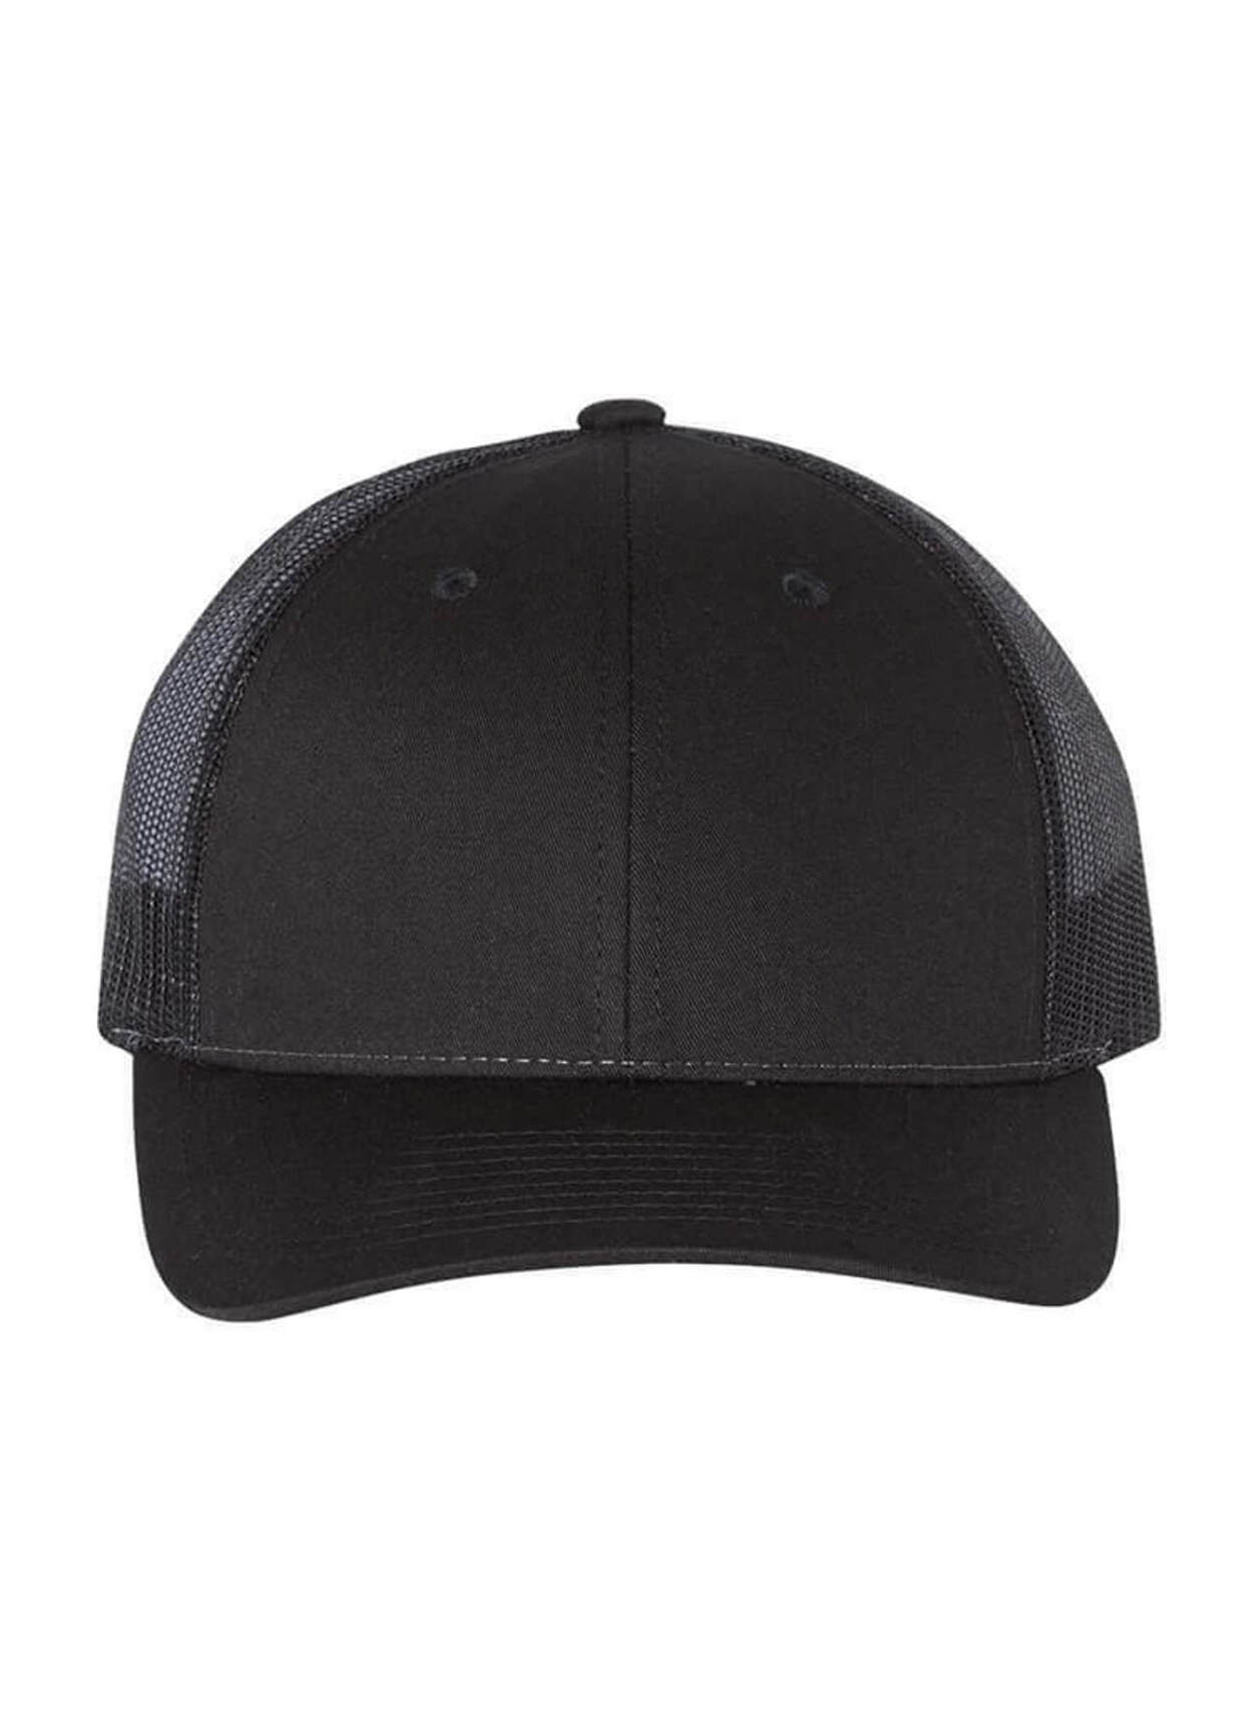 Richardson Black Low Pro Trucker Hat